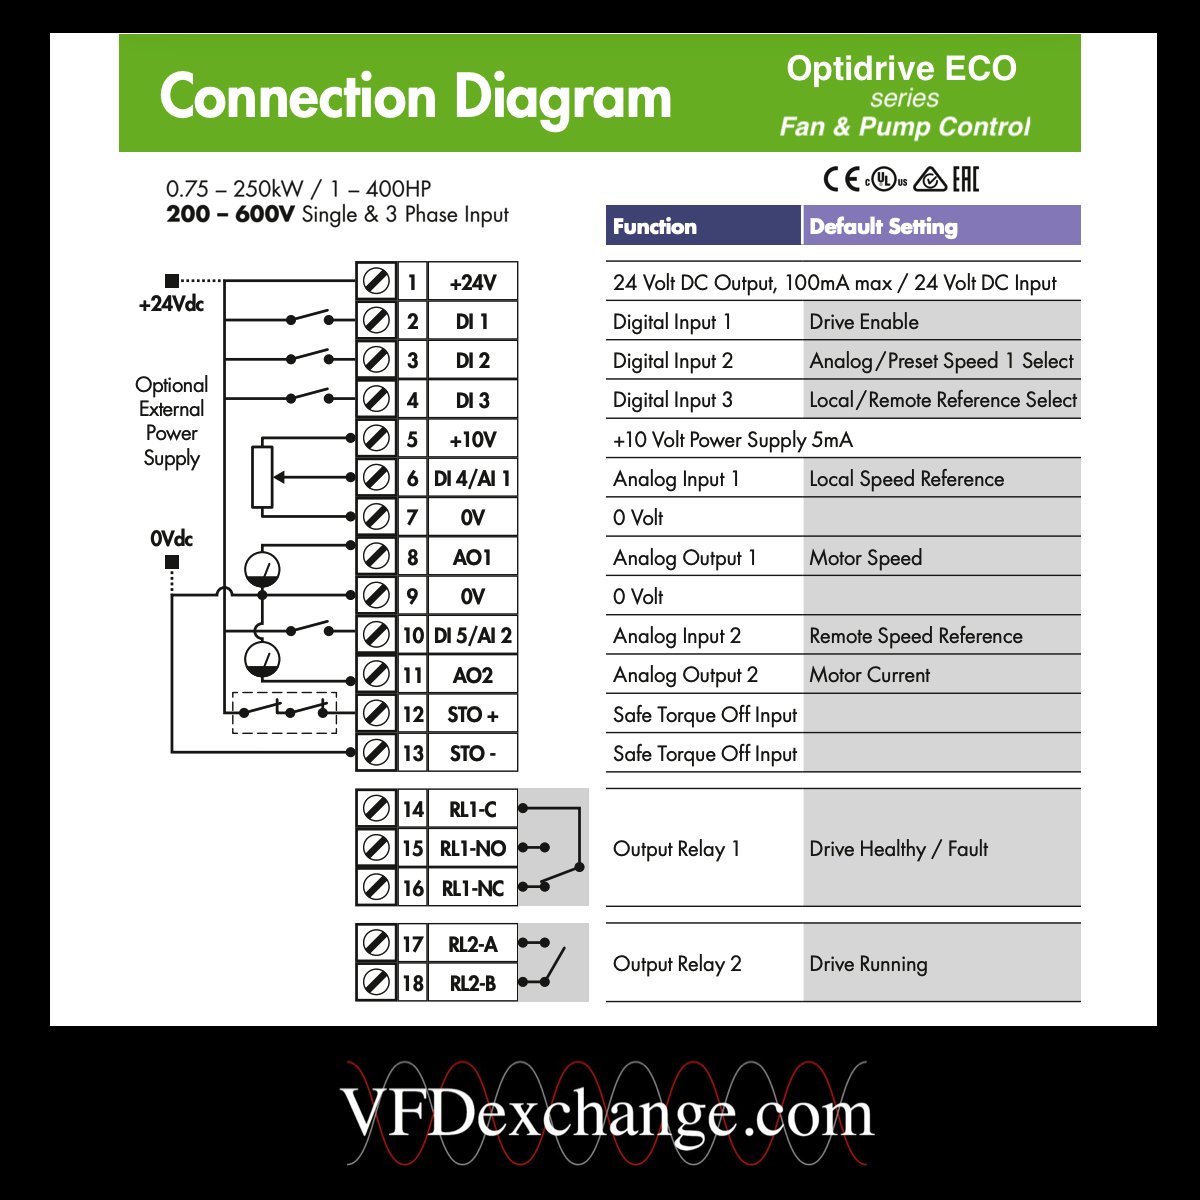 The VFD Exchange
vfdexchange.com

#invertek #optidrive #eco #variablefrequencydrive #acdrive #vfds #fan #pump #terminal #control #USA